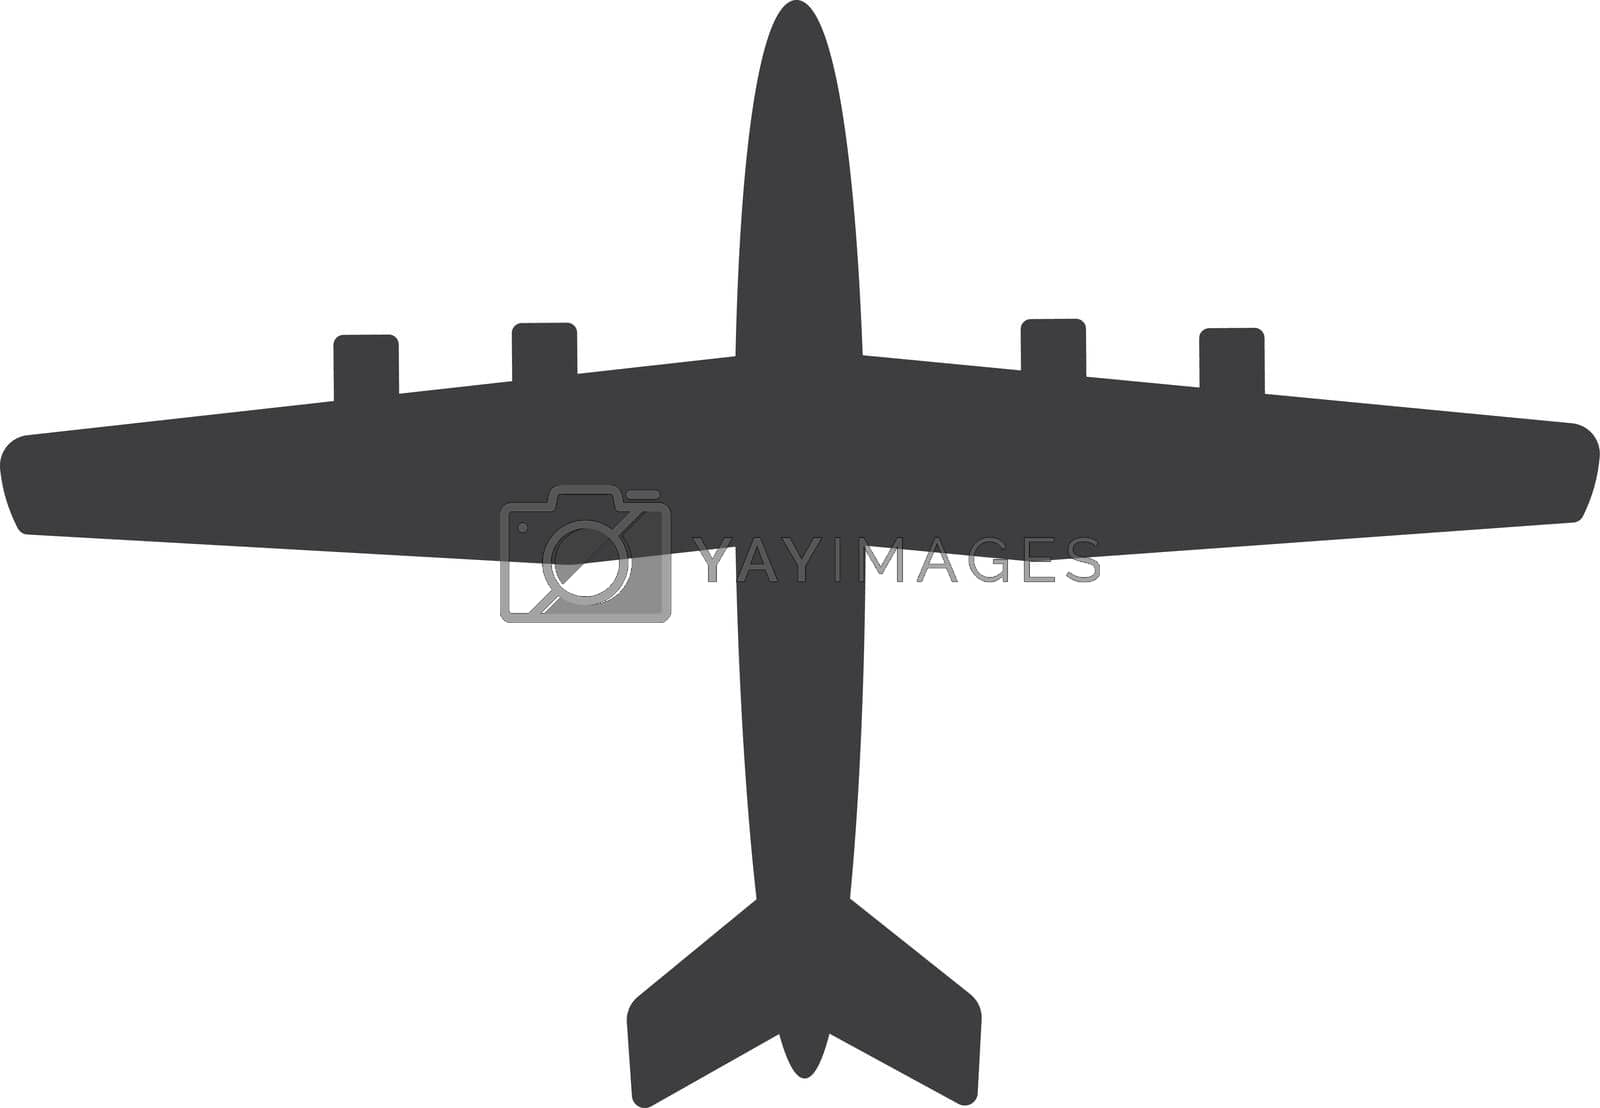 Royalty free image of Black plane silhouette. Flight symbol. Airport icon by LadadikArt